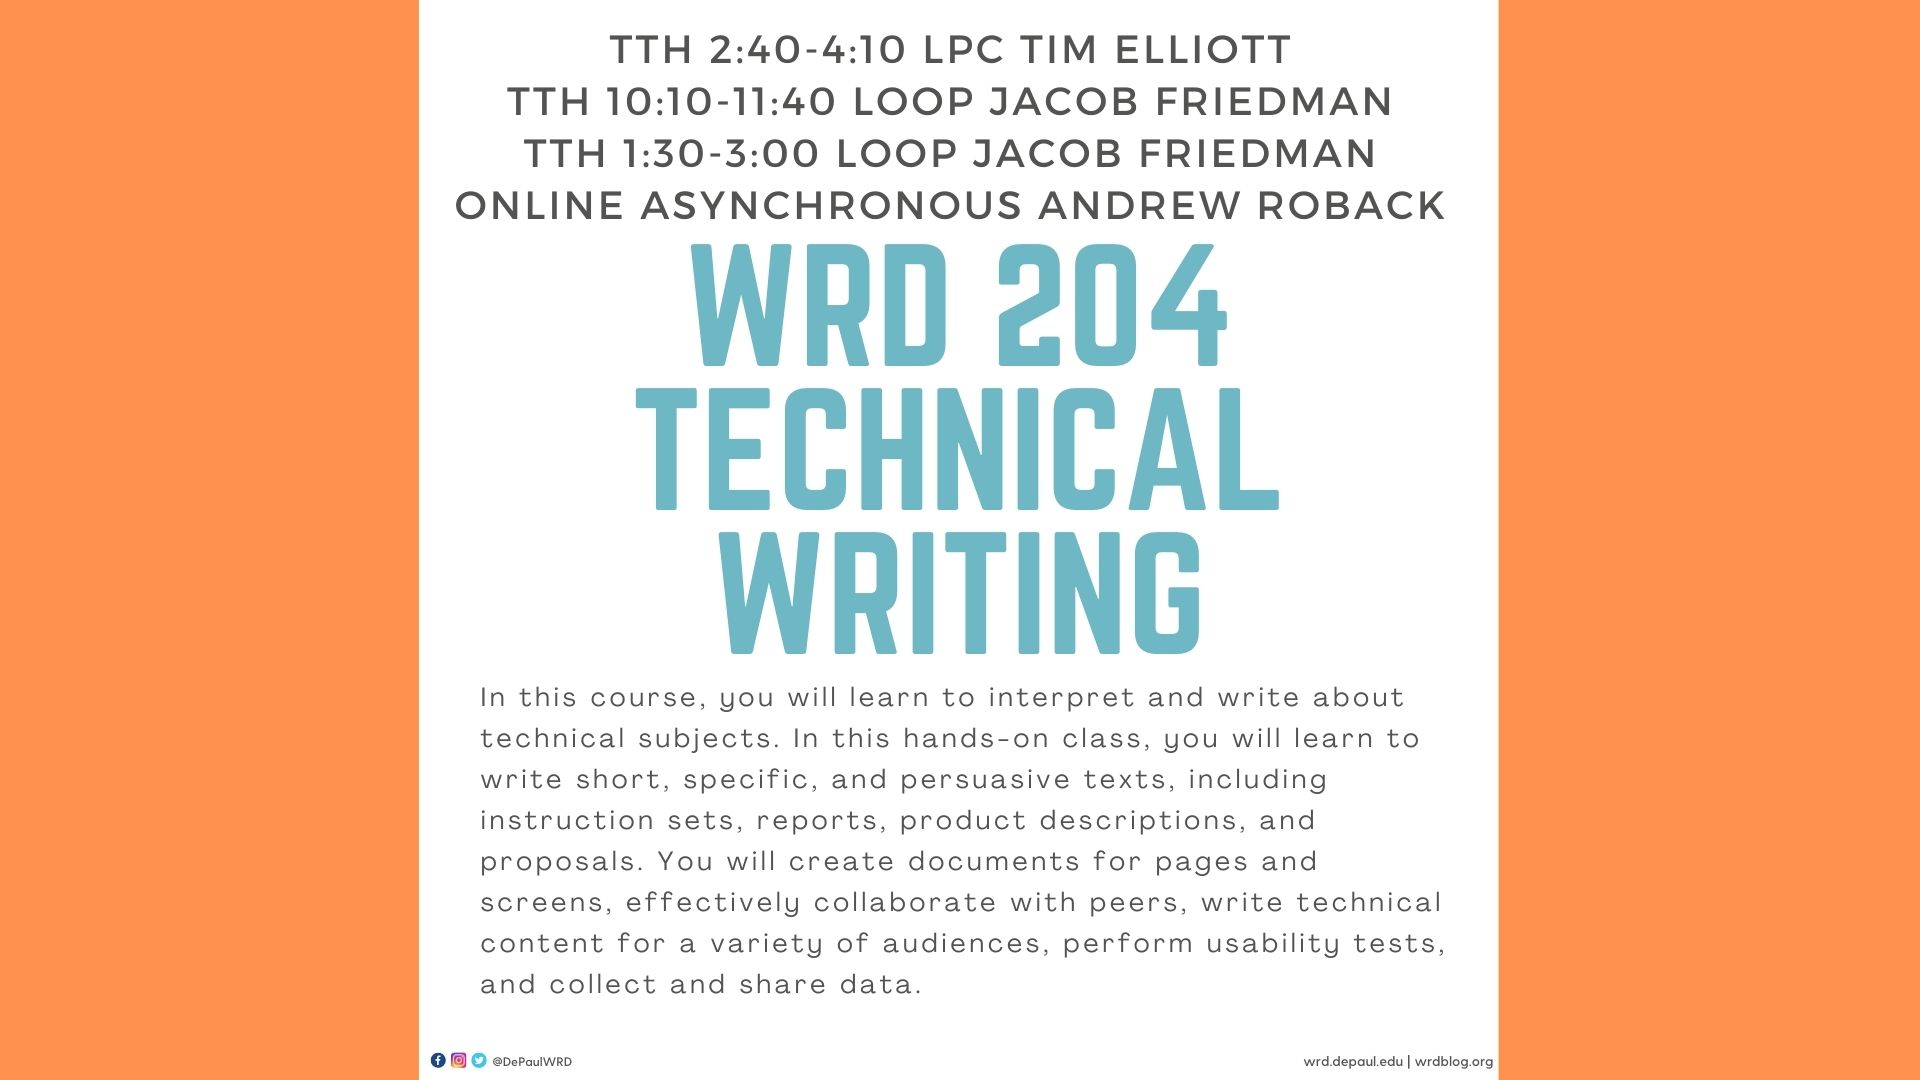 WRD 204 Technical Writing